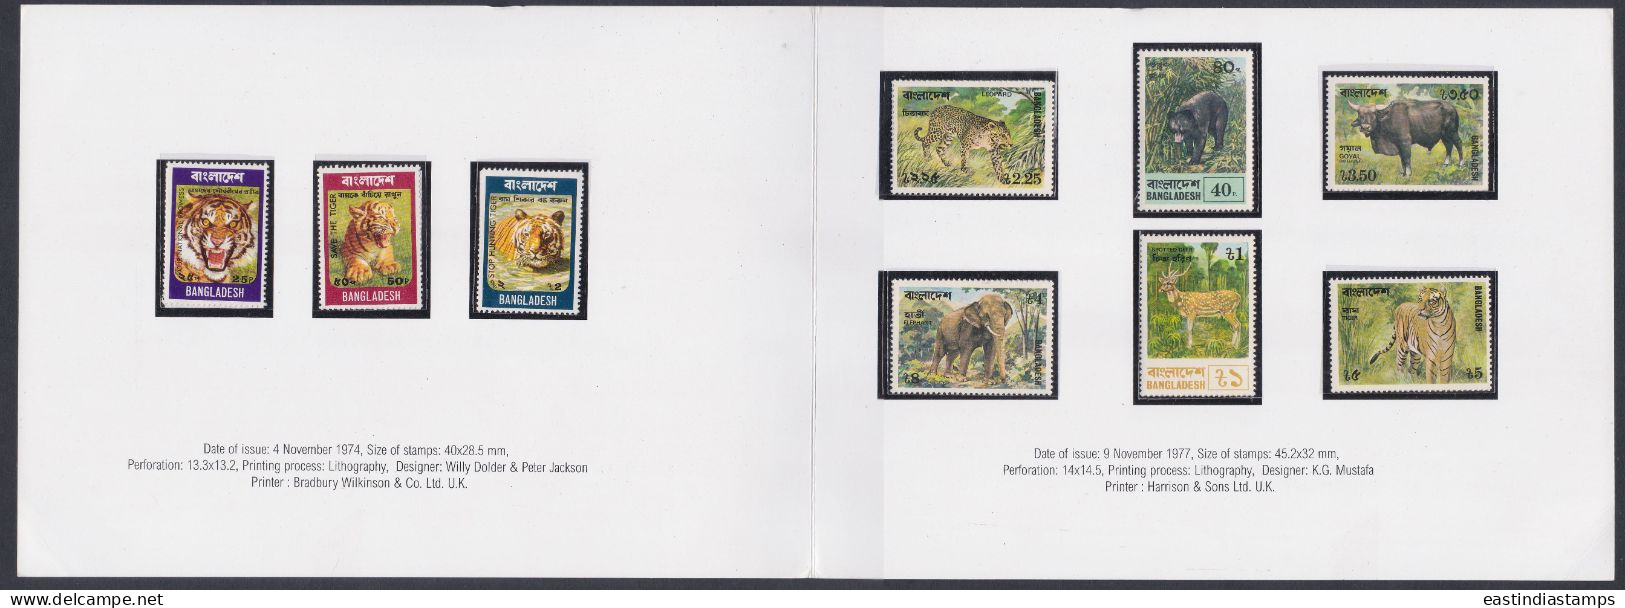 Bangladesh 1974 1977 MNH Stamps, Tiger, Tigers, Wild Life, Wild Life, Animal, Animals, Deer, Elephant, Leopar, Bear - Bangladesch